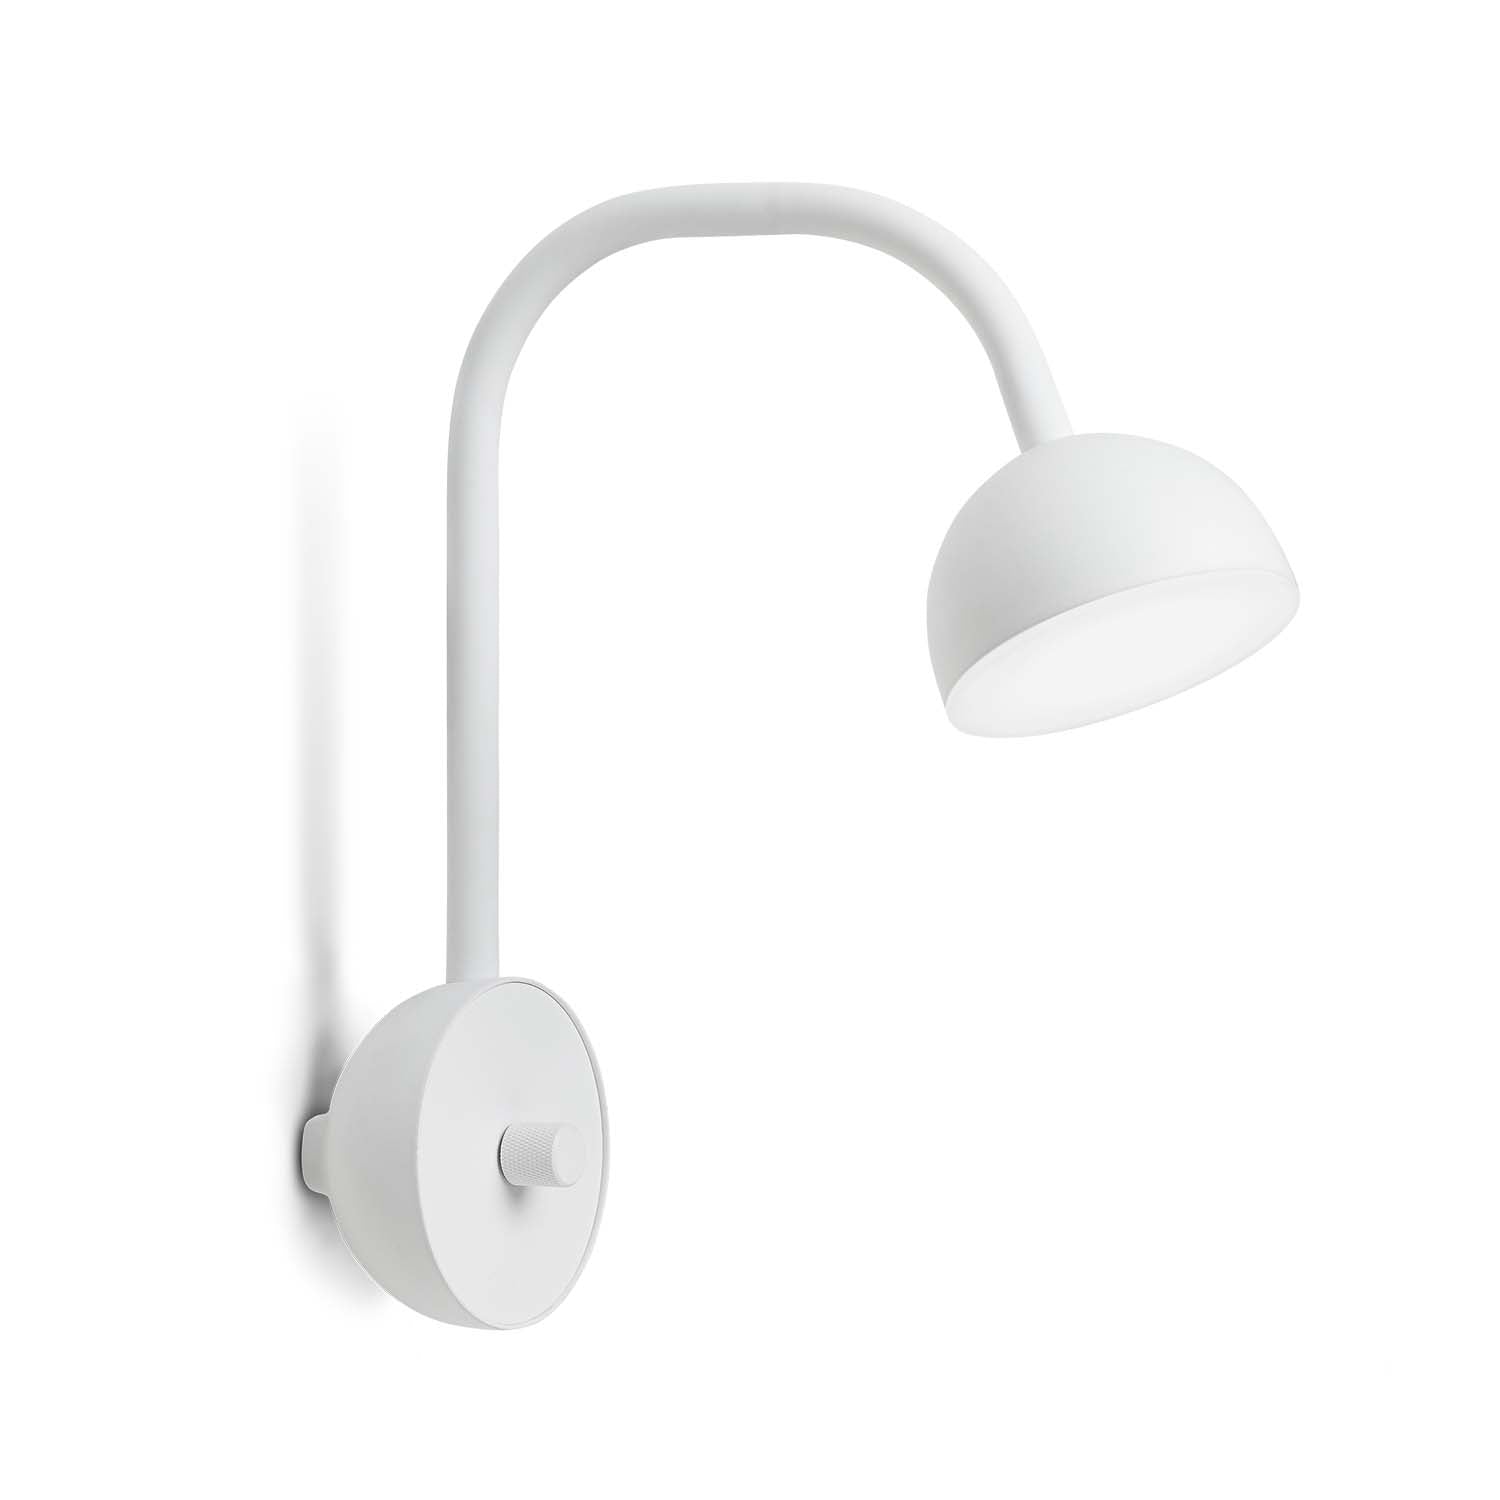 BLUSH Wall - Wall light for bedroom, headboard reading lamp